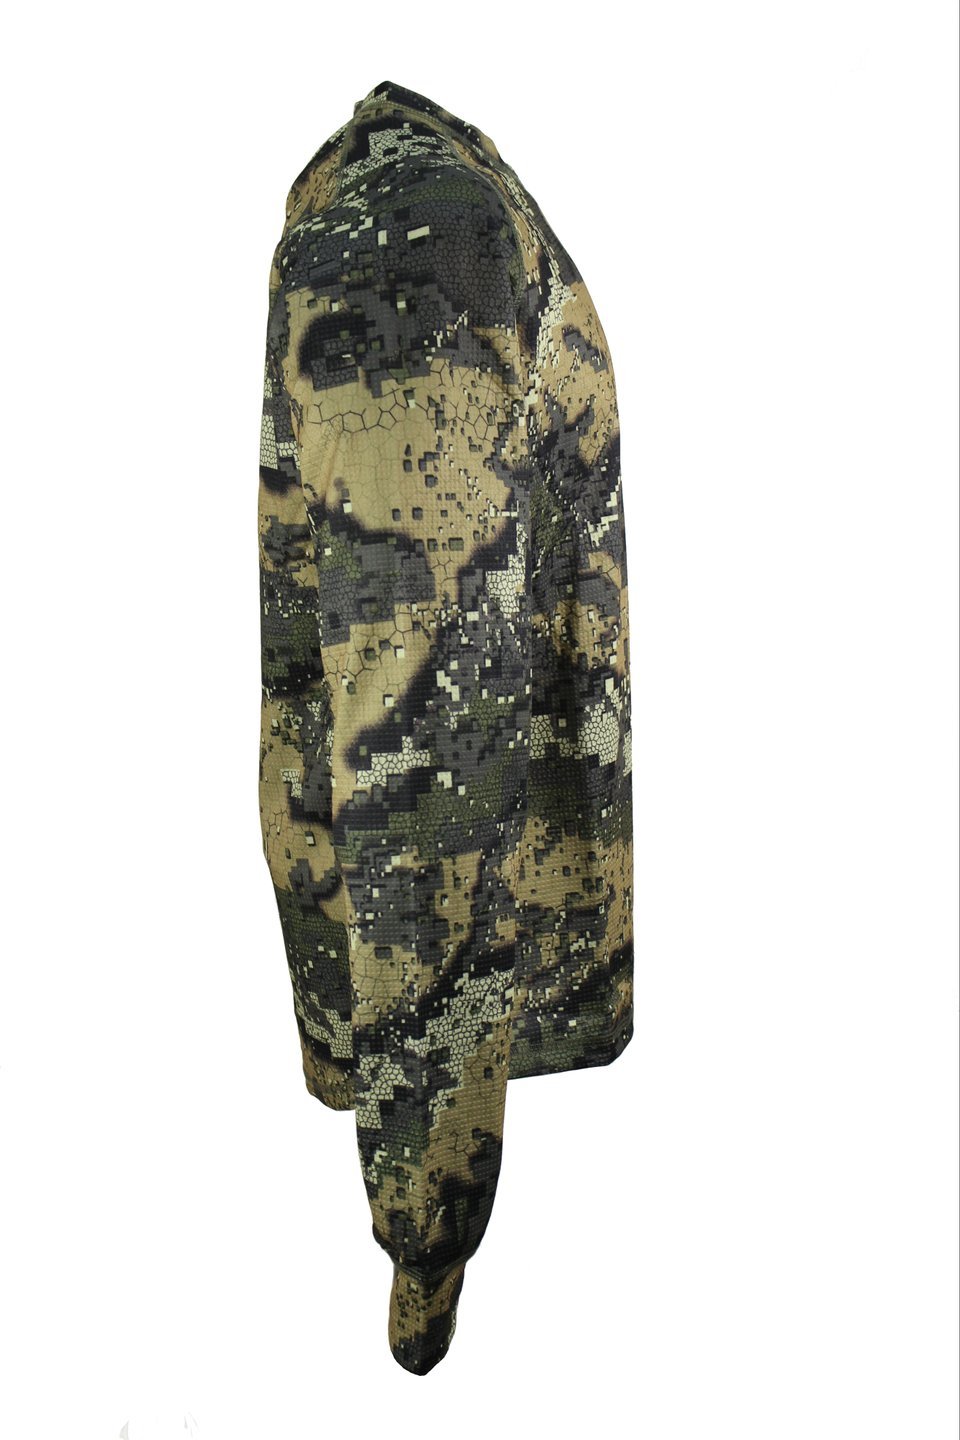 Джемпер охотничий  Remington Men's  Camouflage T-Shirt  APG Hunting Camo, цвет Optifade, р. S (RM1305-999)